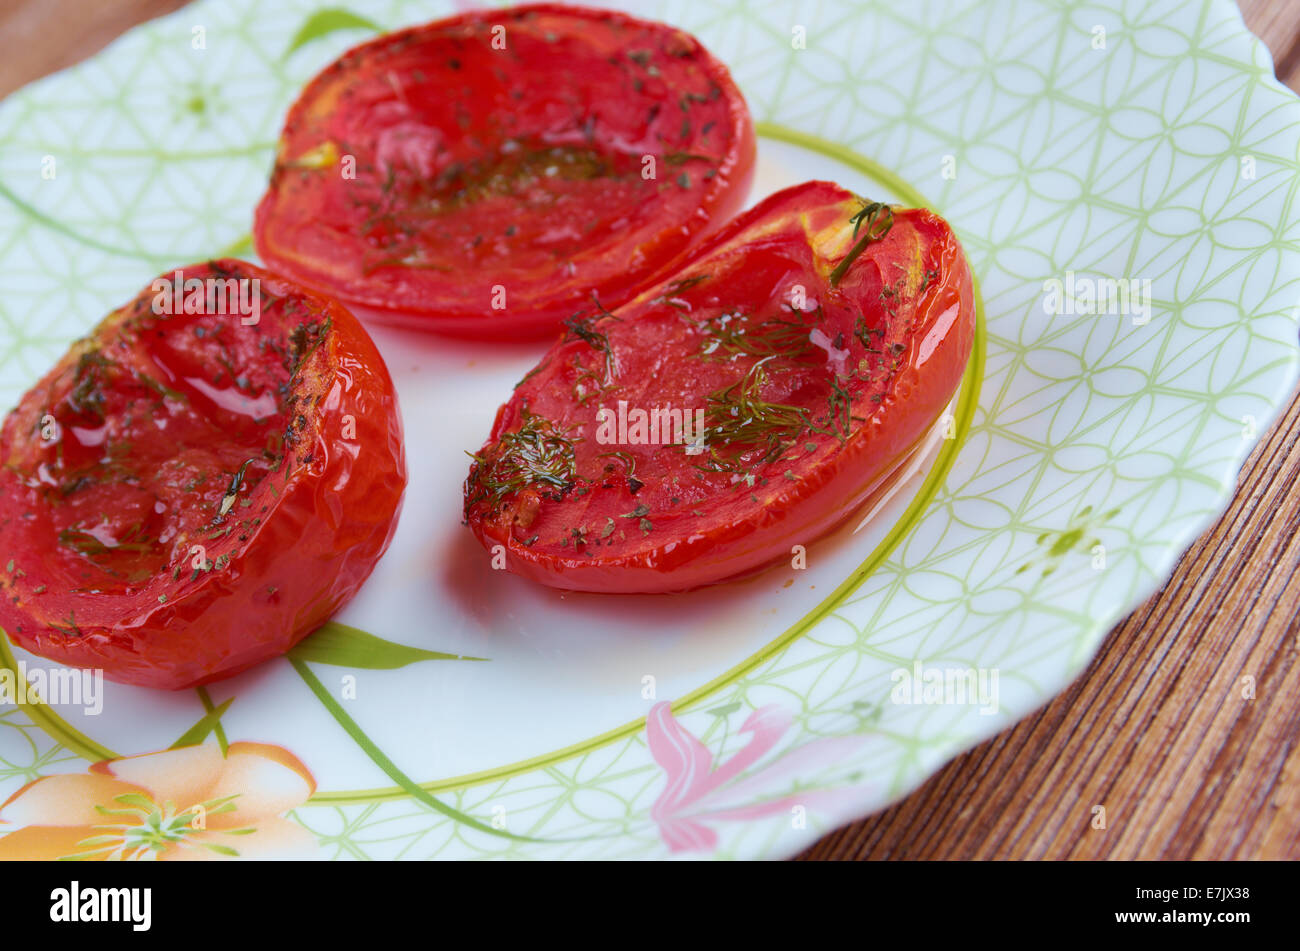 pomodori al forno - Italian stuffed baked tomatoes Stock Photo